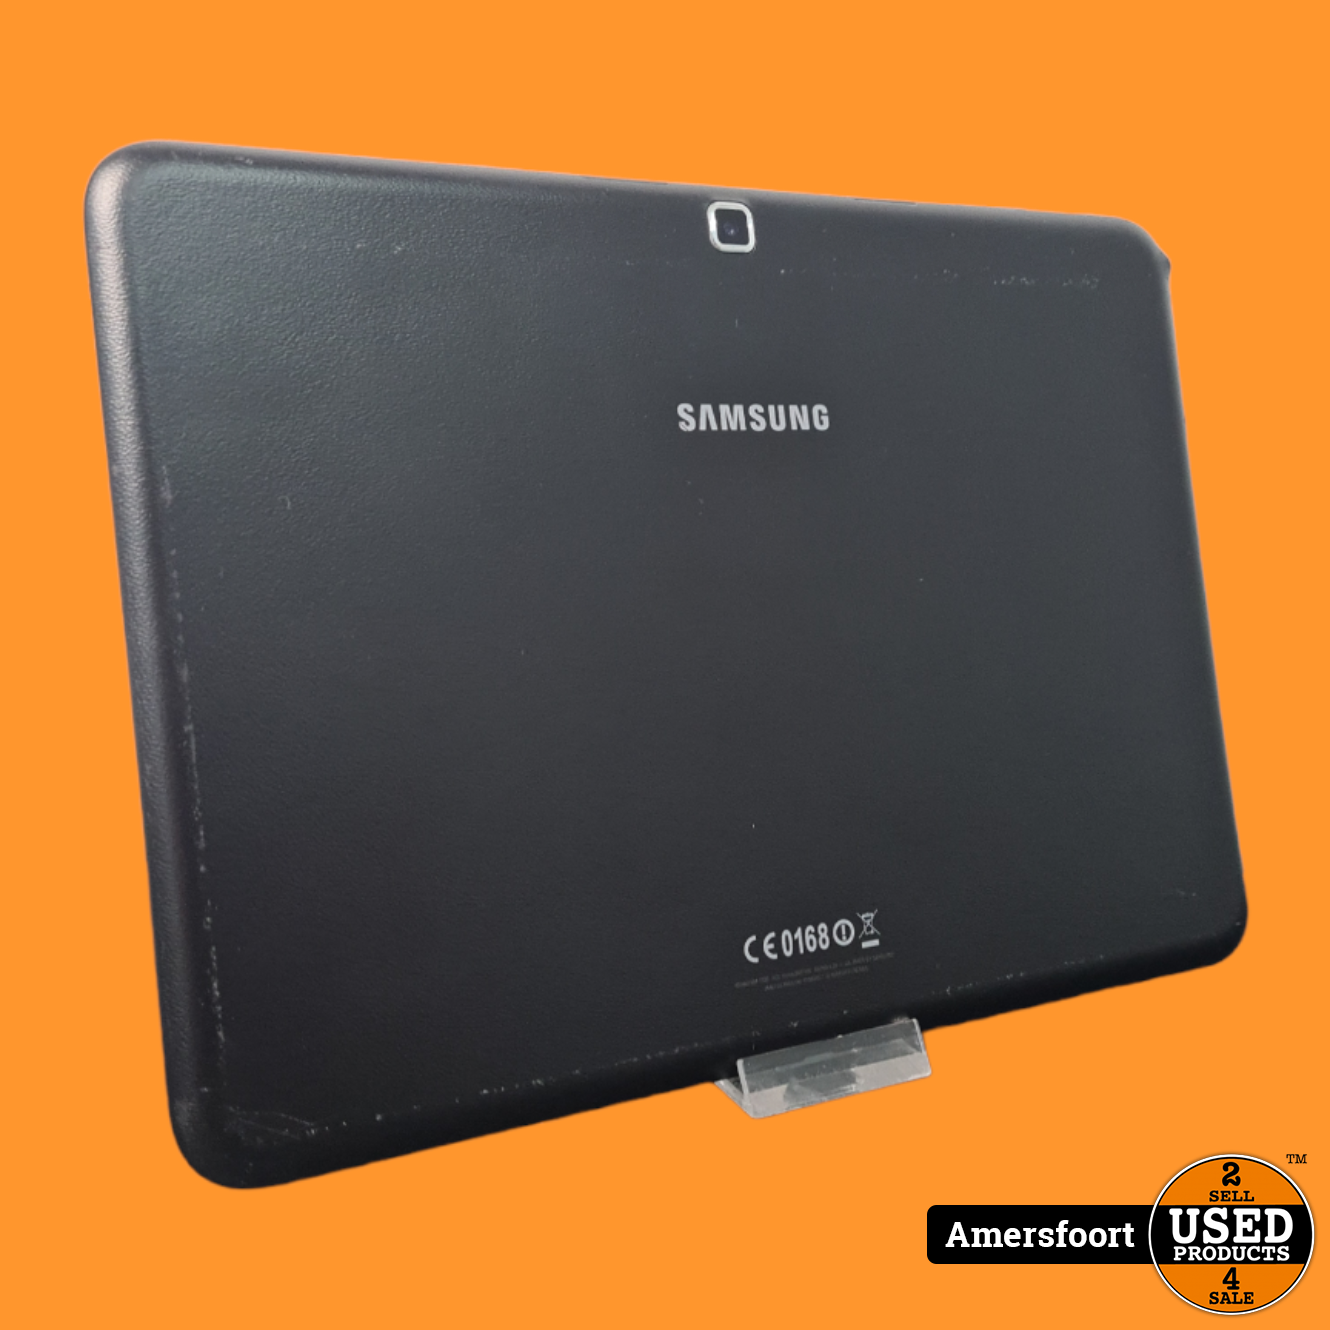 Galaxy Tab 4 10.1 16GB Wifi - Used Products Amersfoort